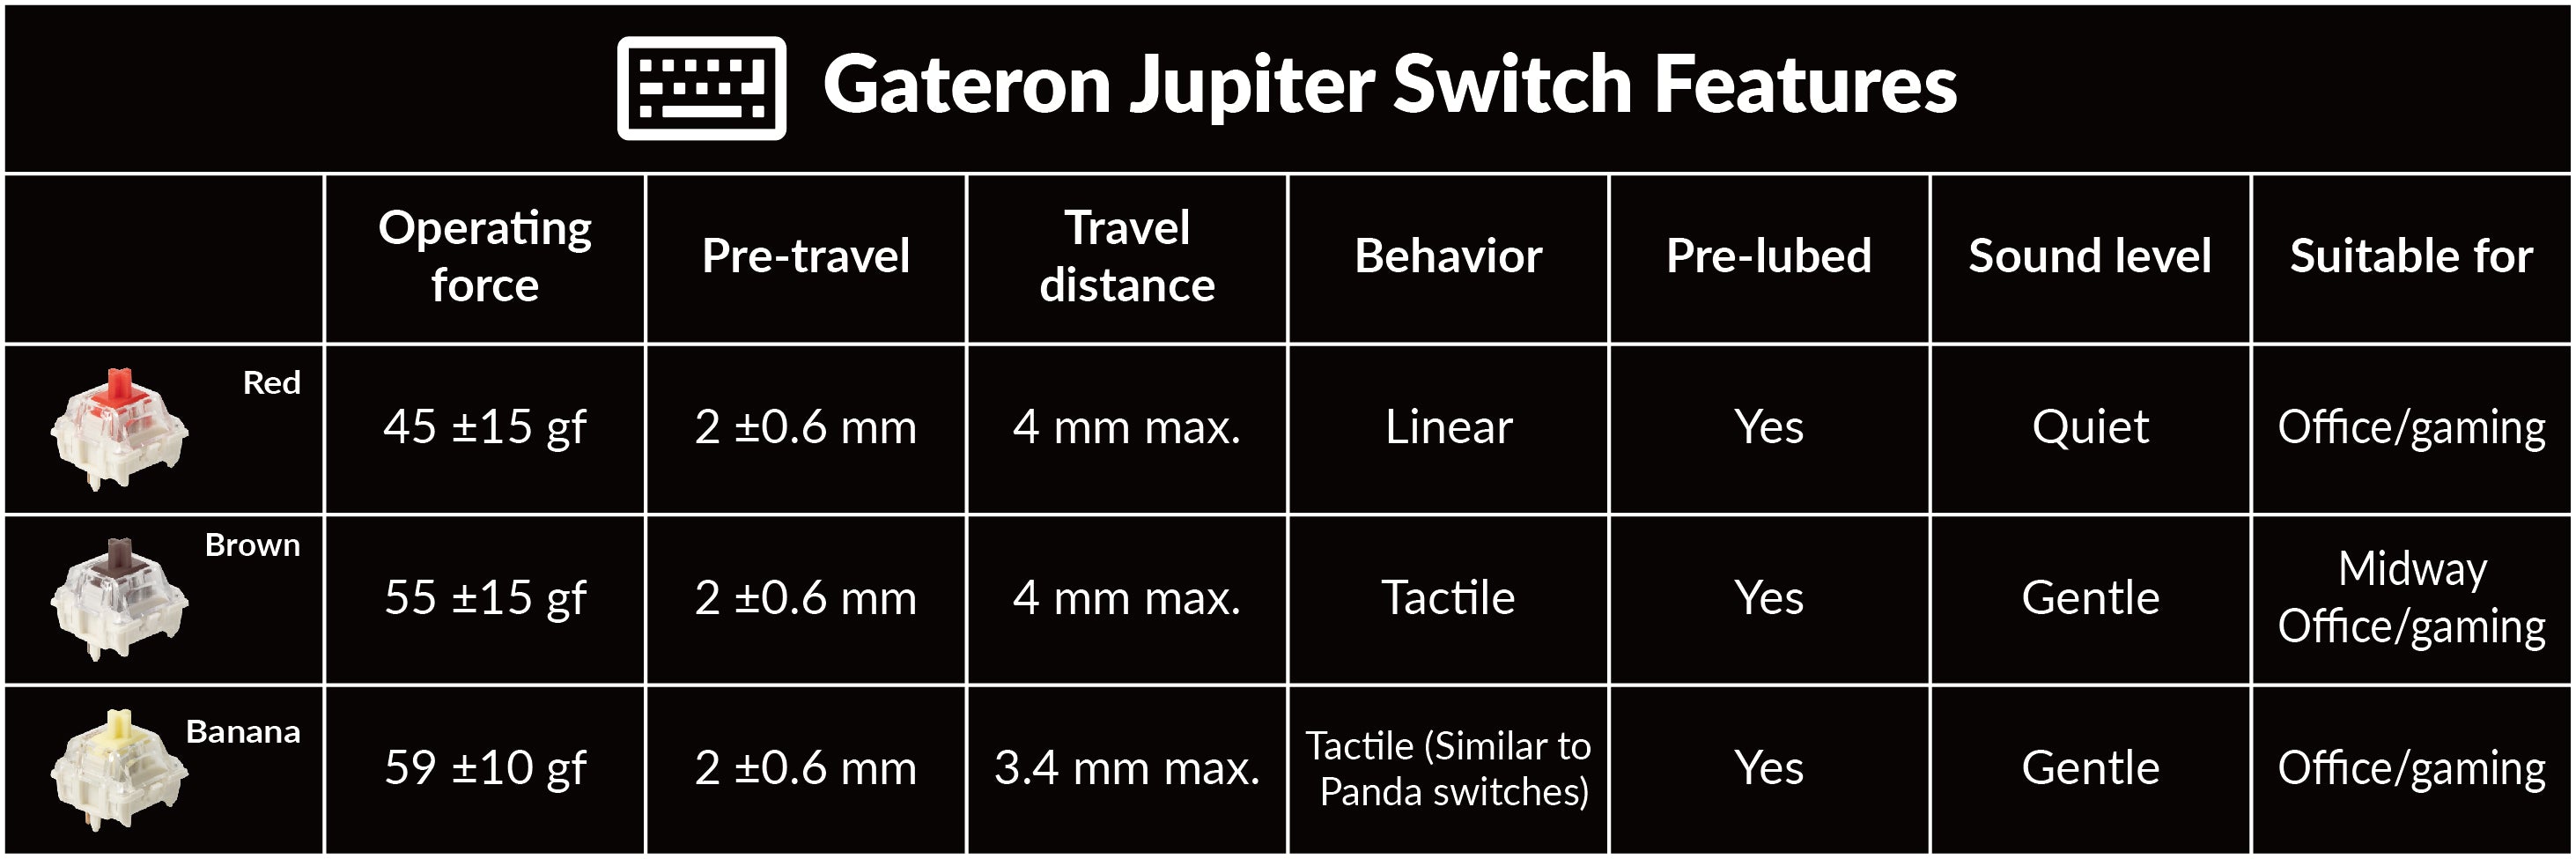 keychron-gateron-jupiter-mx-mechanical-switch-red-brown-banana__PID:f4c06257-0809-4c30-90f6-b72b5b84480b